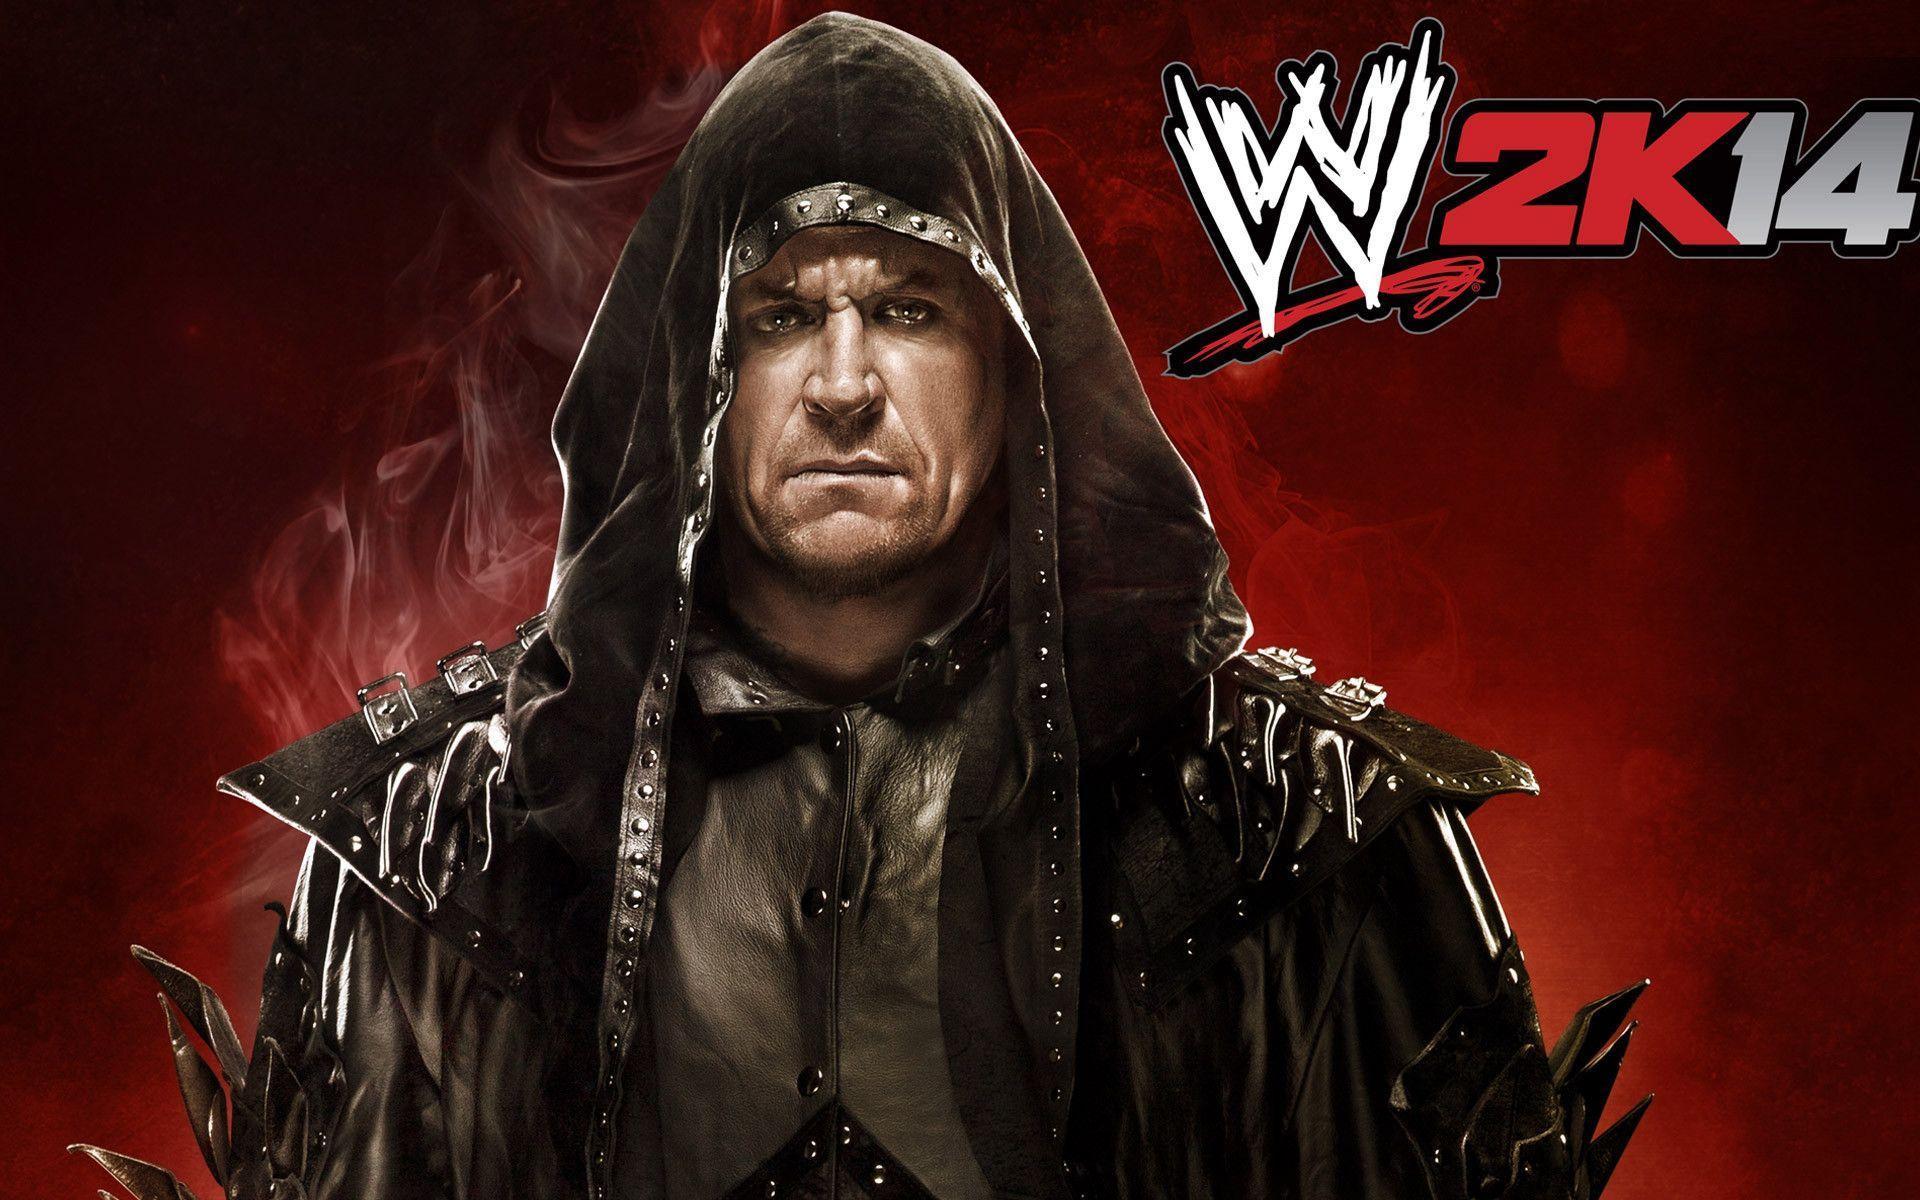 The Undertaker 2014 WWE RAW Wallpaper